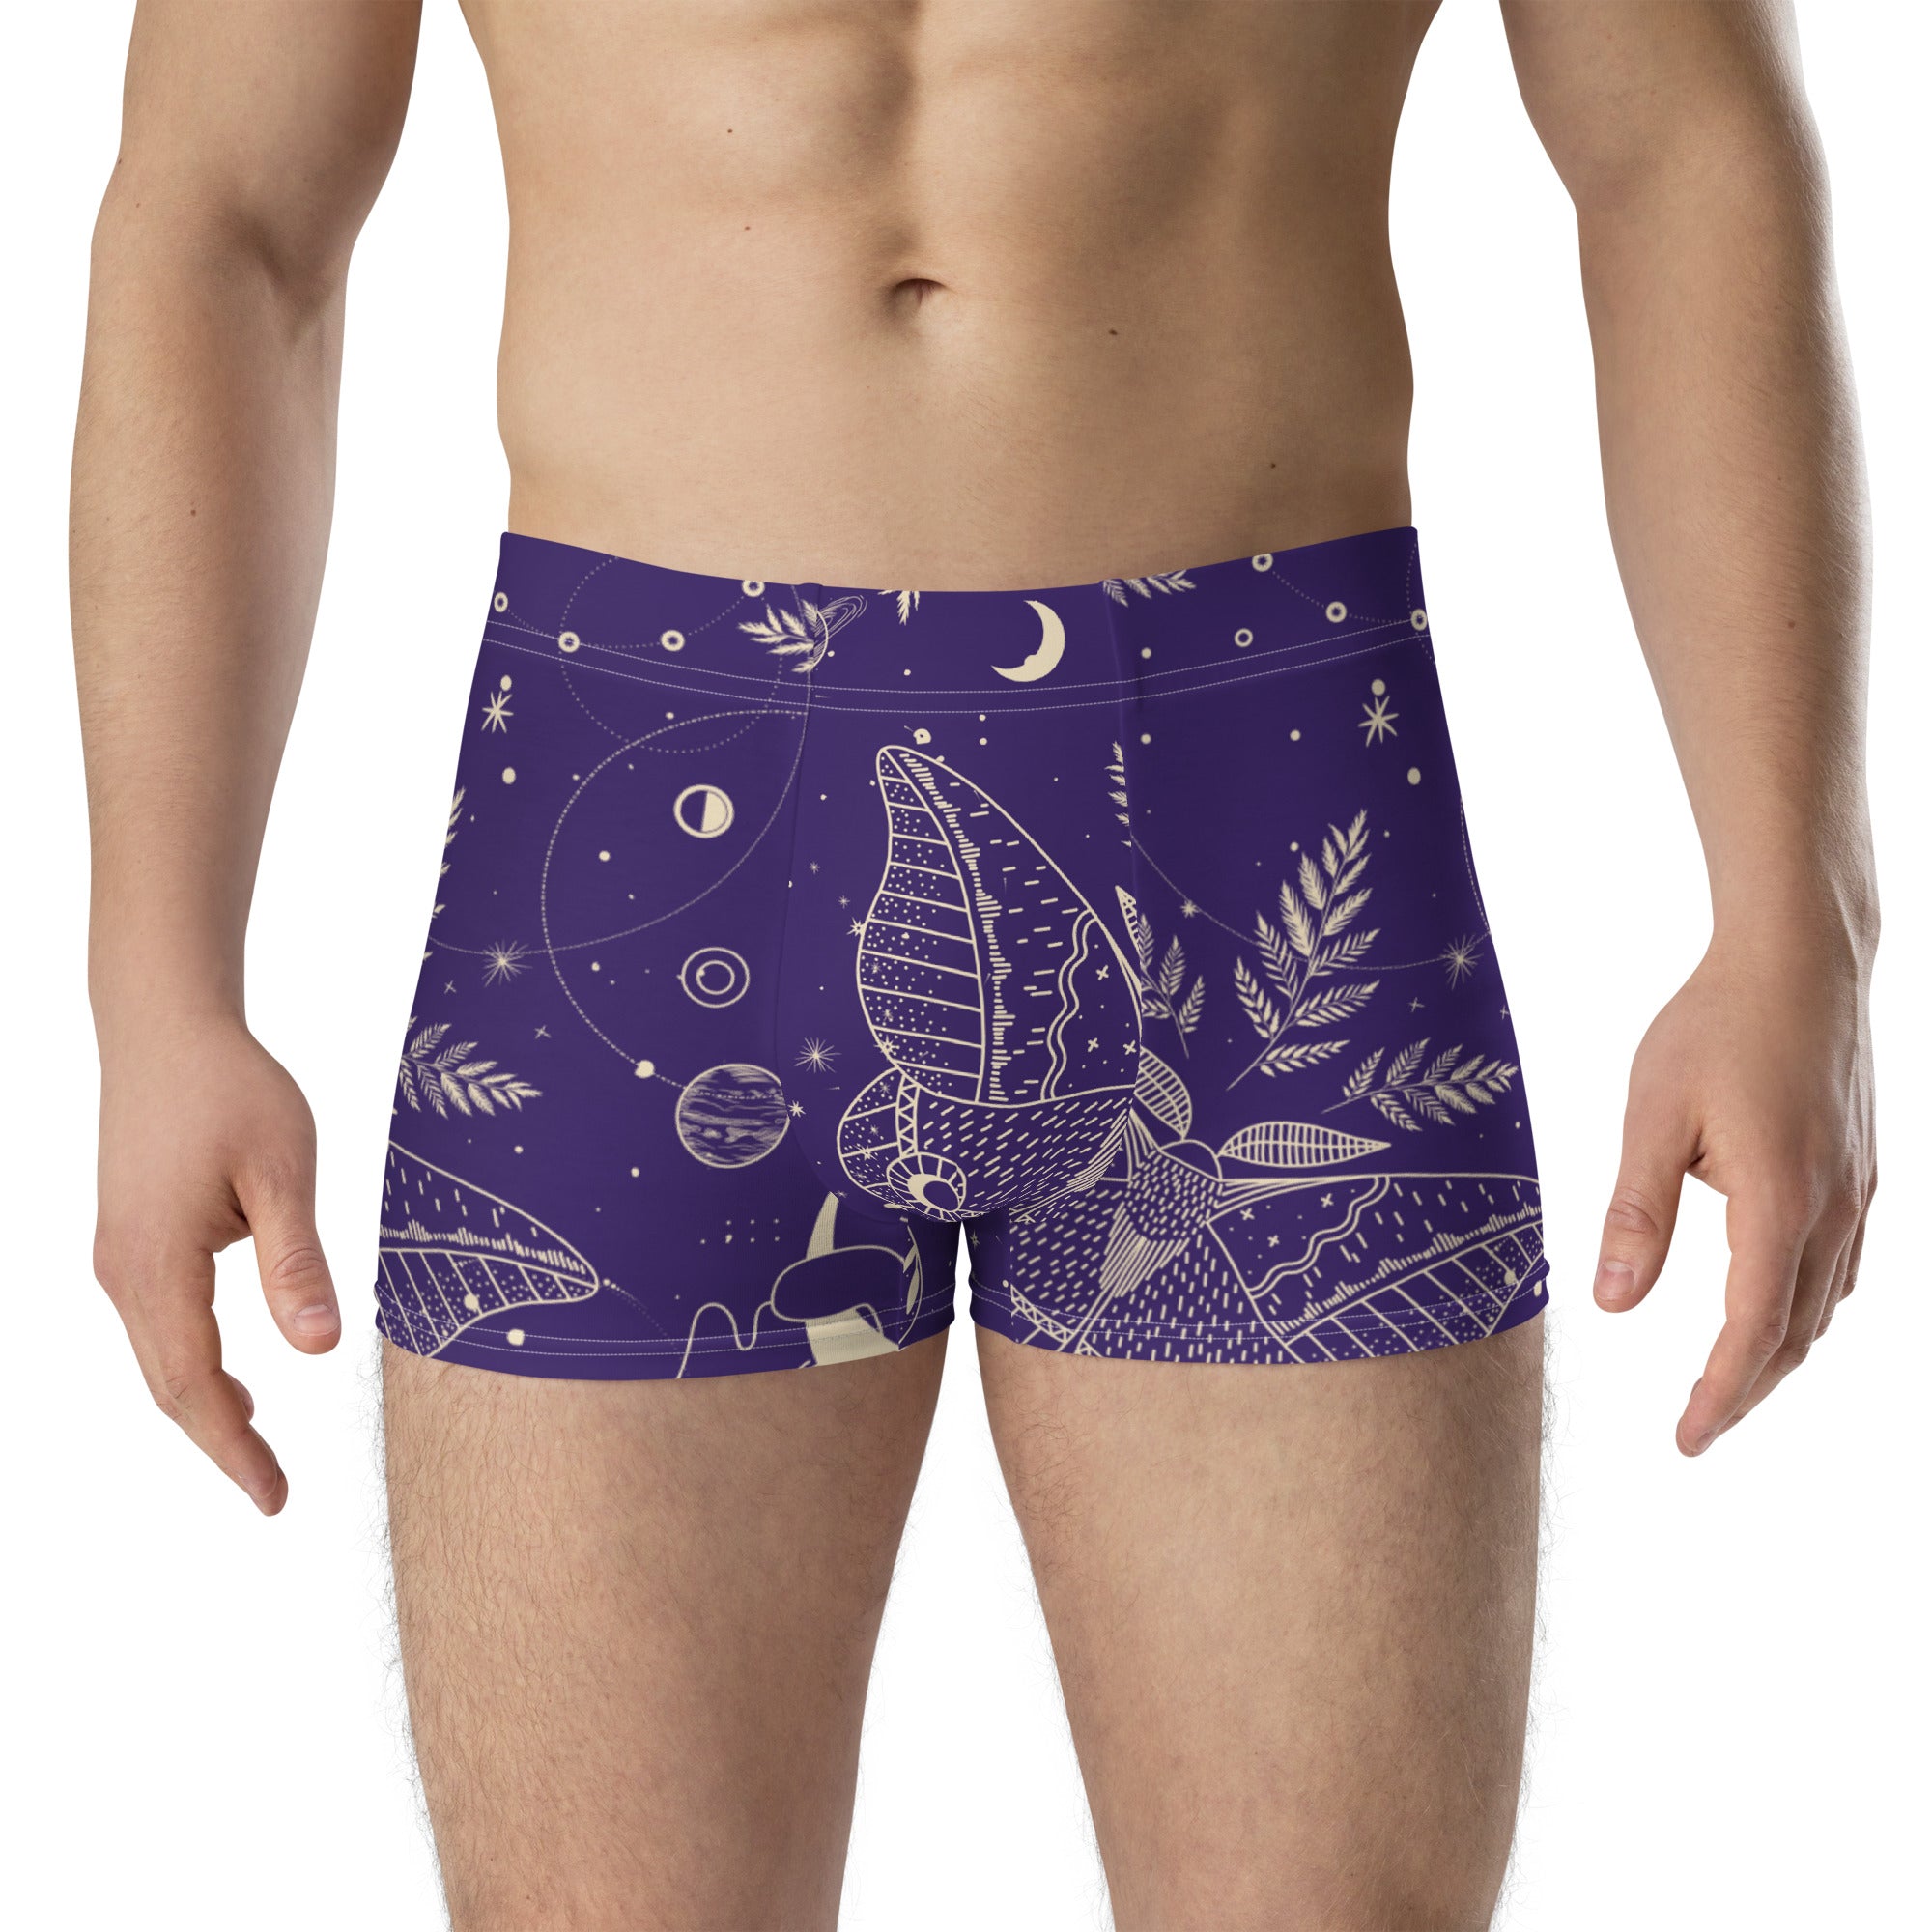 Designer purple graphic print boxer briefs for men